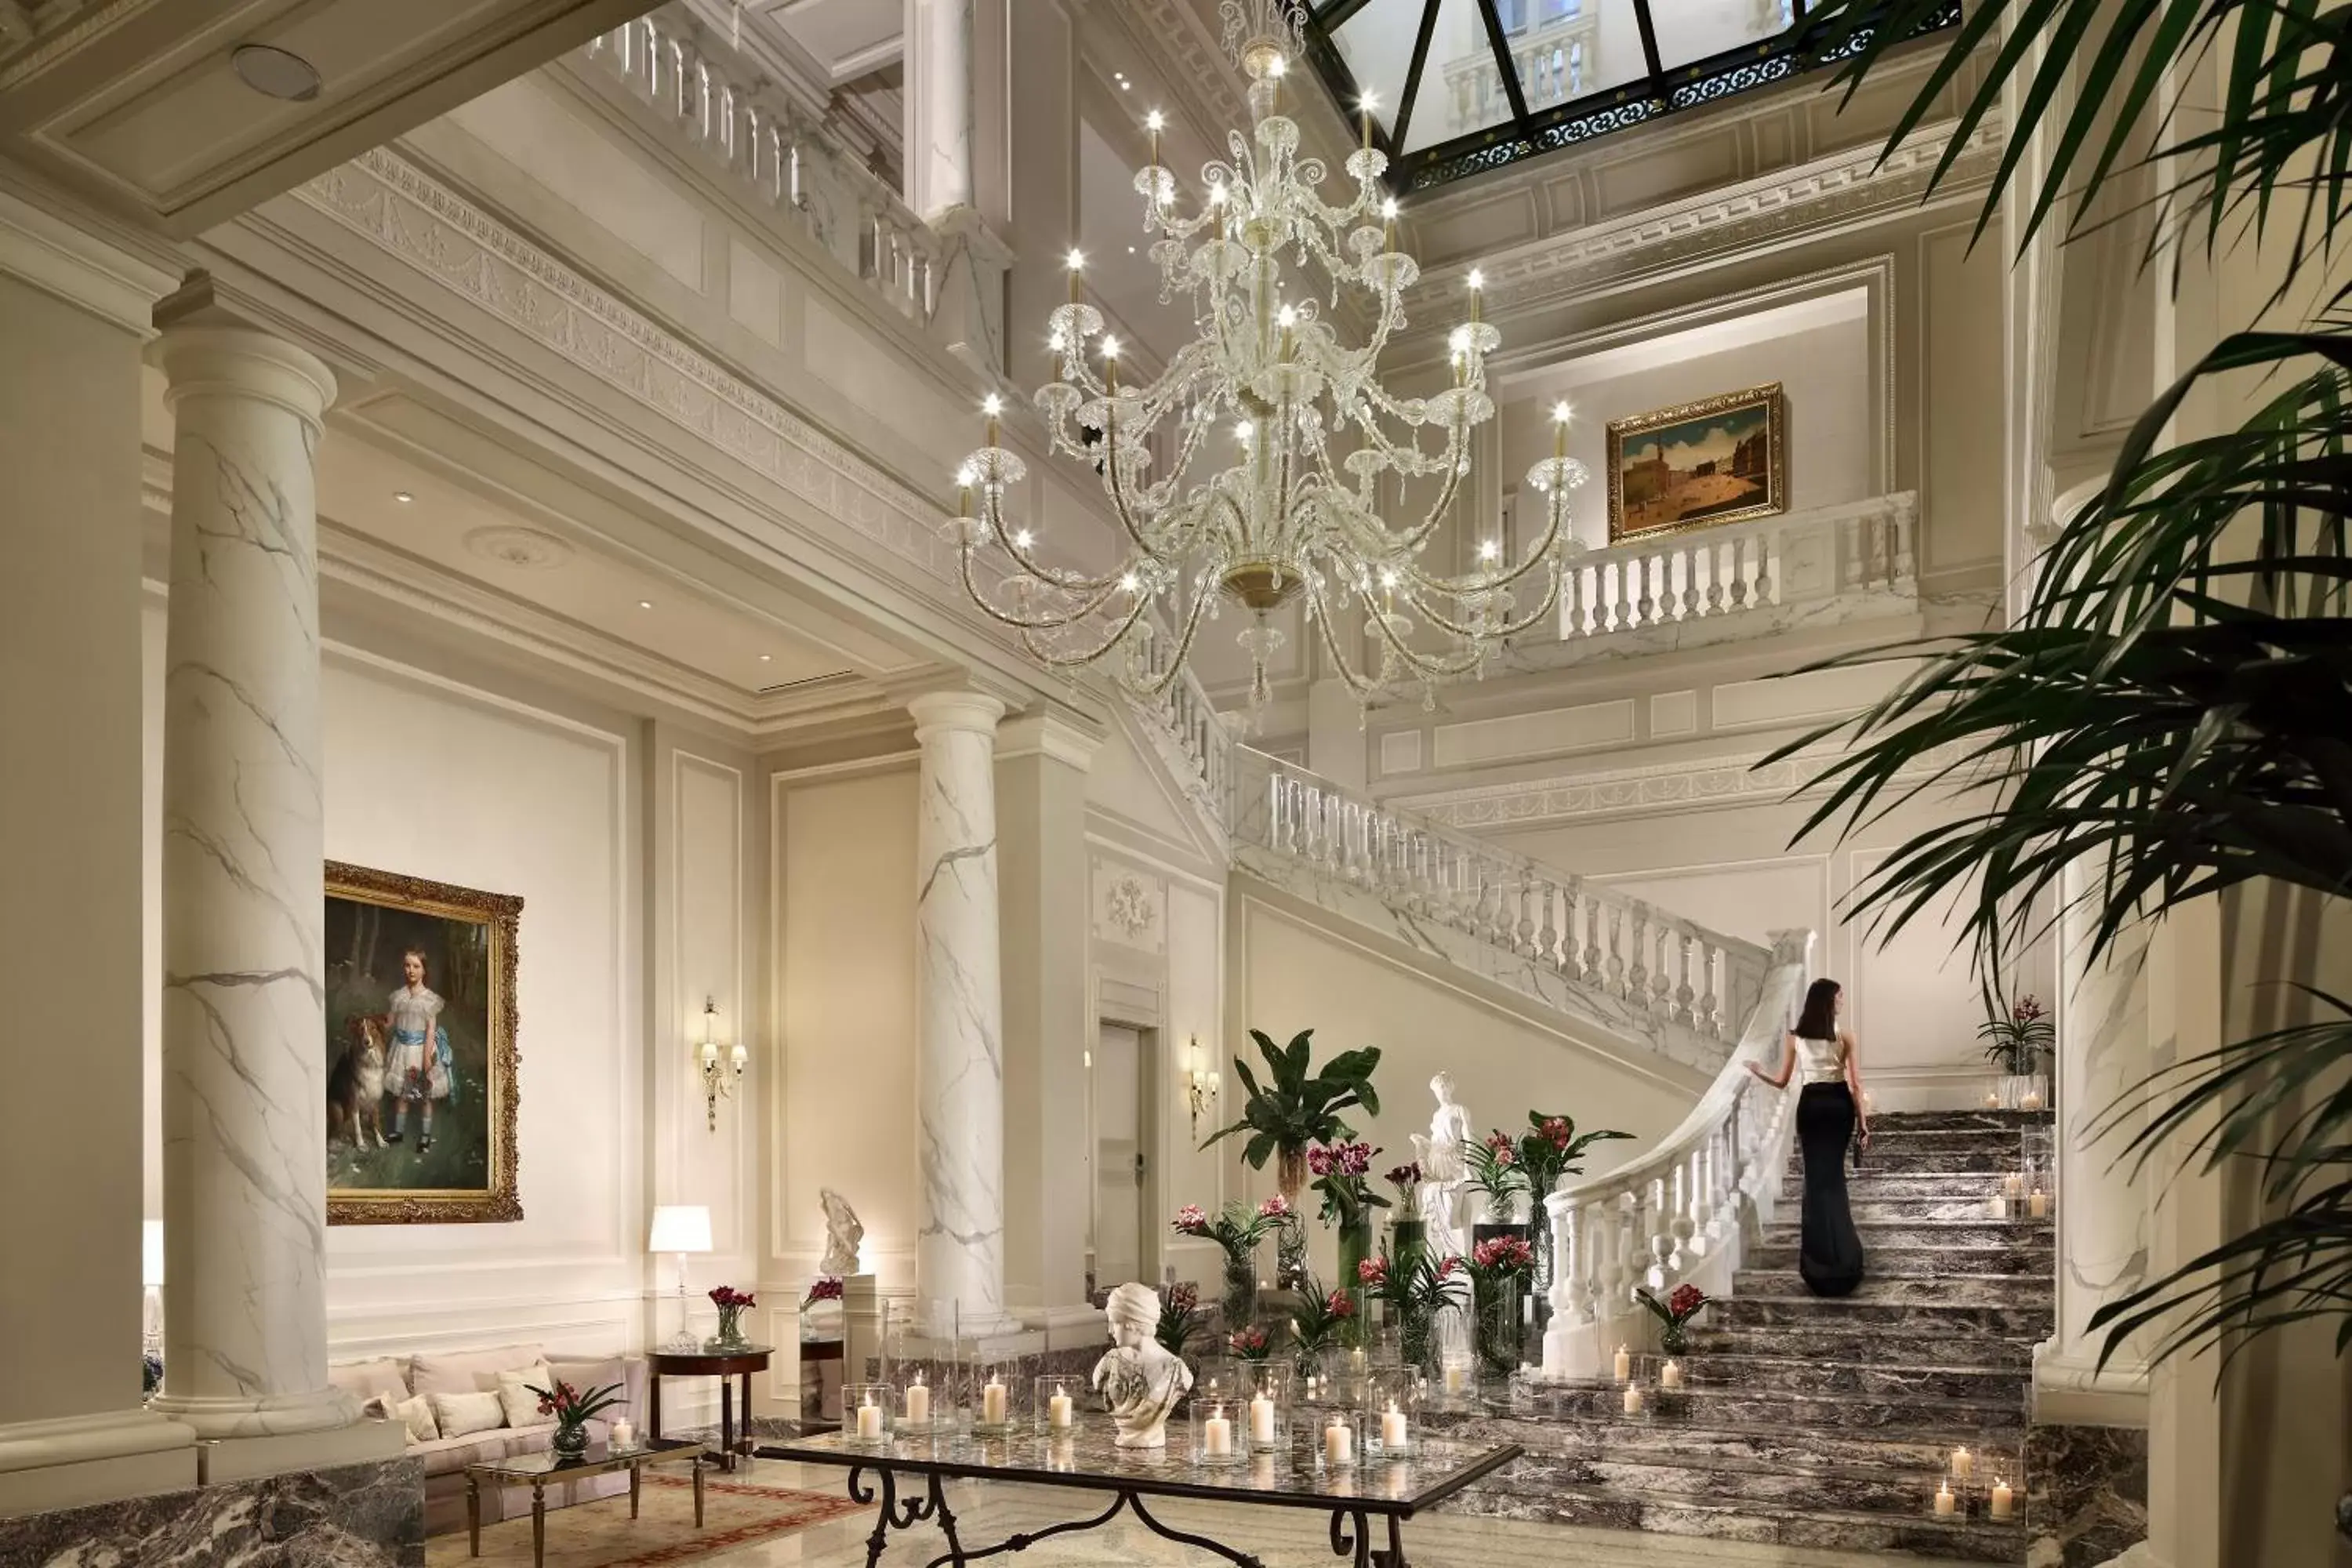 Lobby or reception in Palazzo Parigi Hotel & Grand Spa - LHW